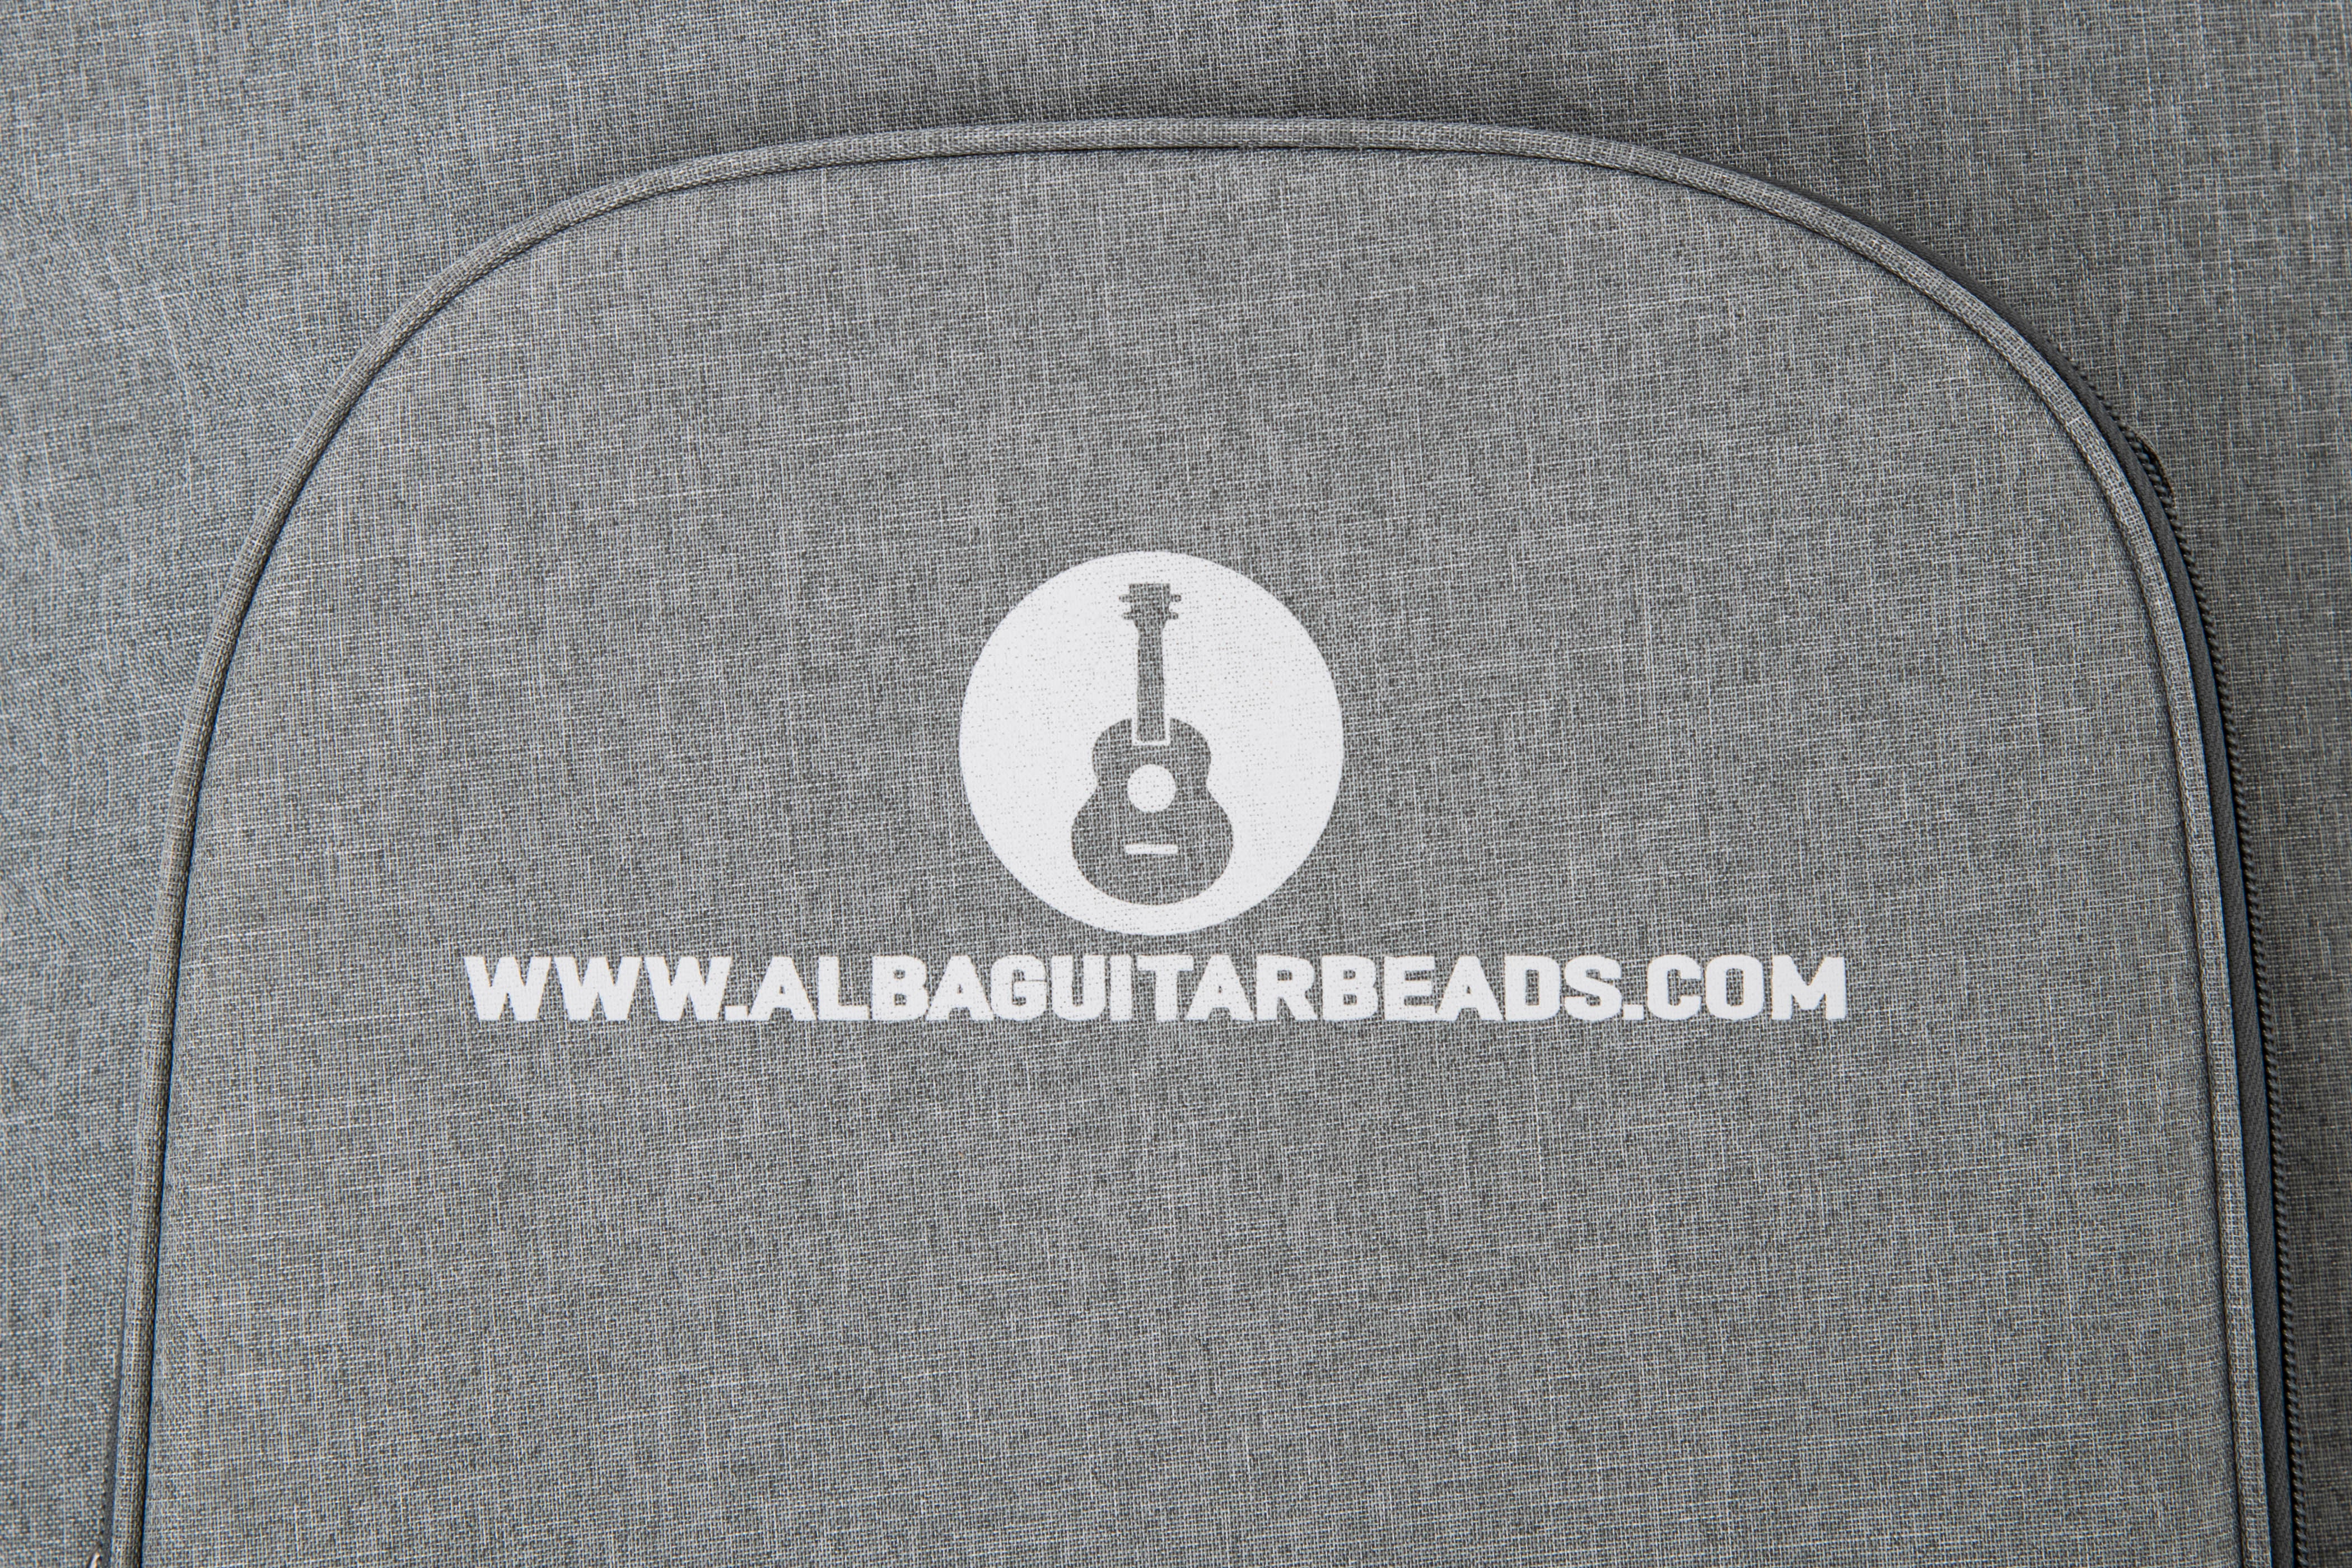 Copertura protettiva Alba Guitar Beads per custodie per chitarra in carbonio, copertura da viaggio per custodie in carbonio per chitarra classica e chitarra flamenca